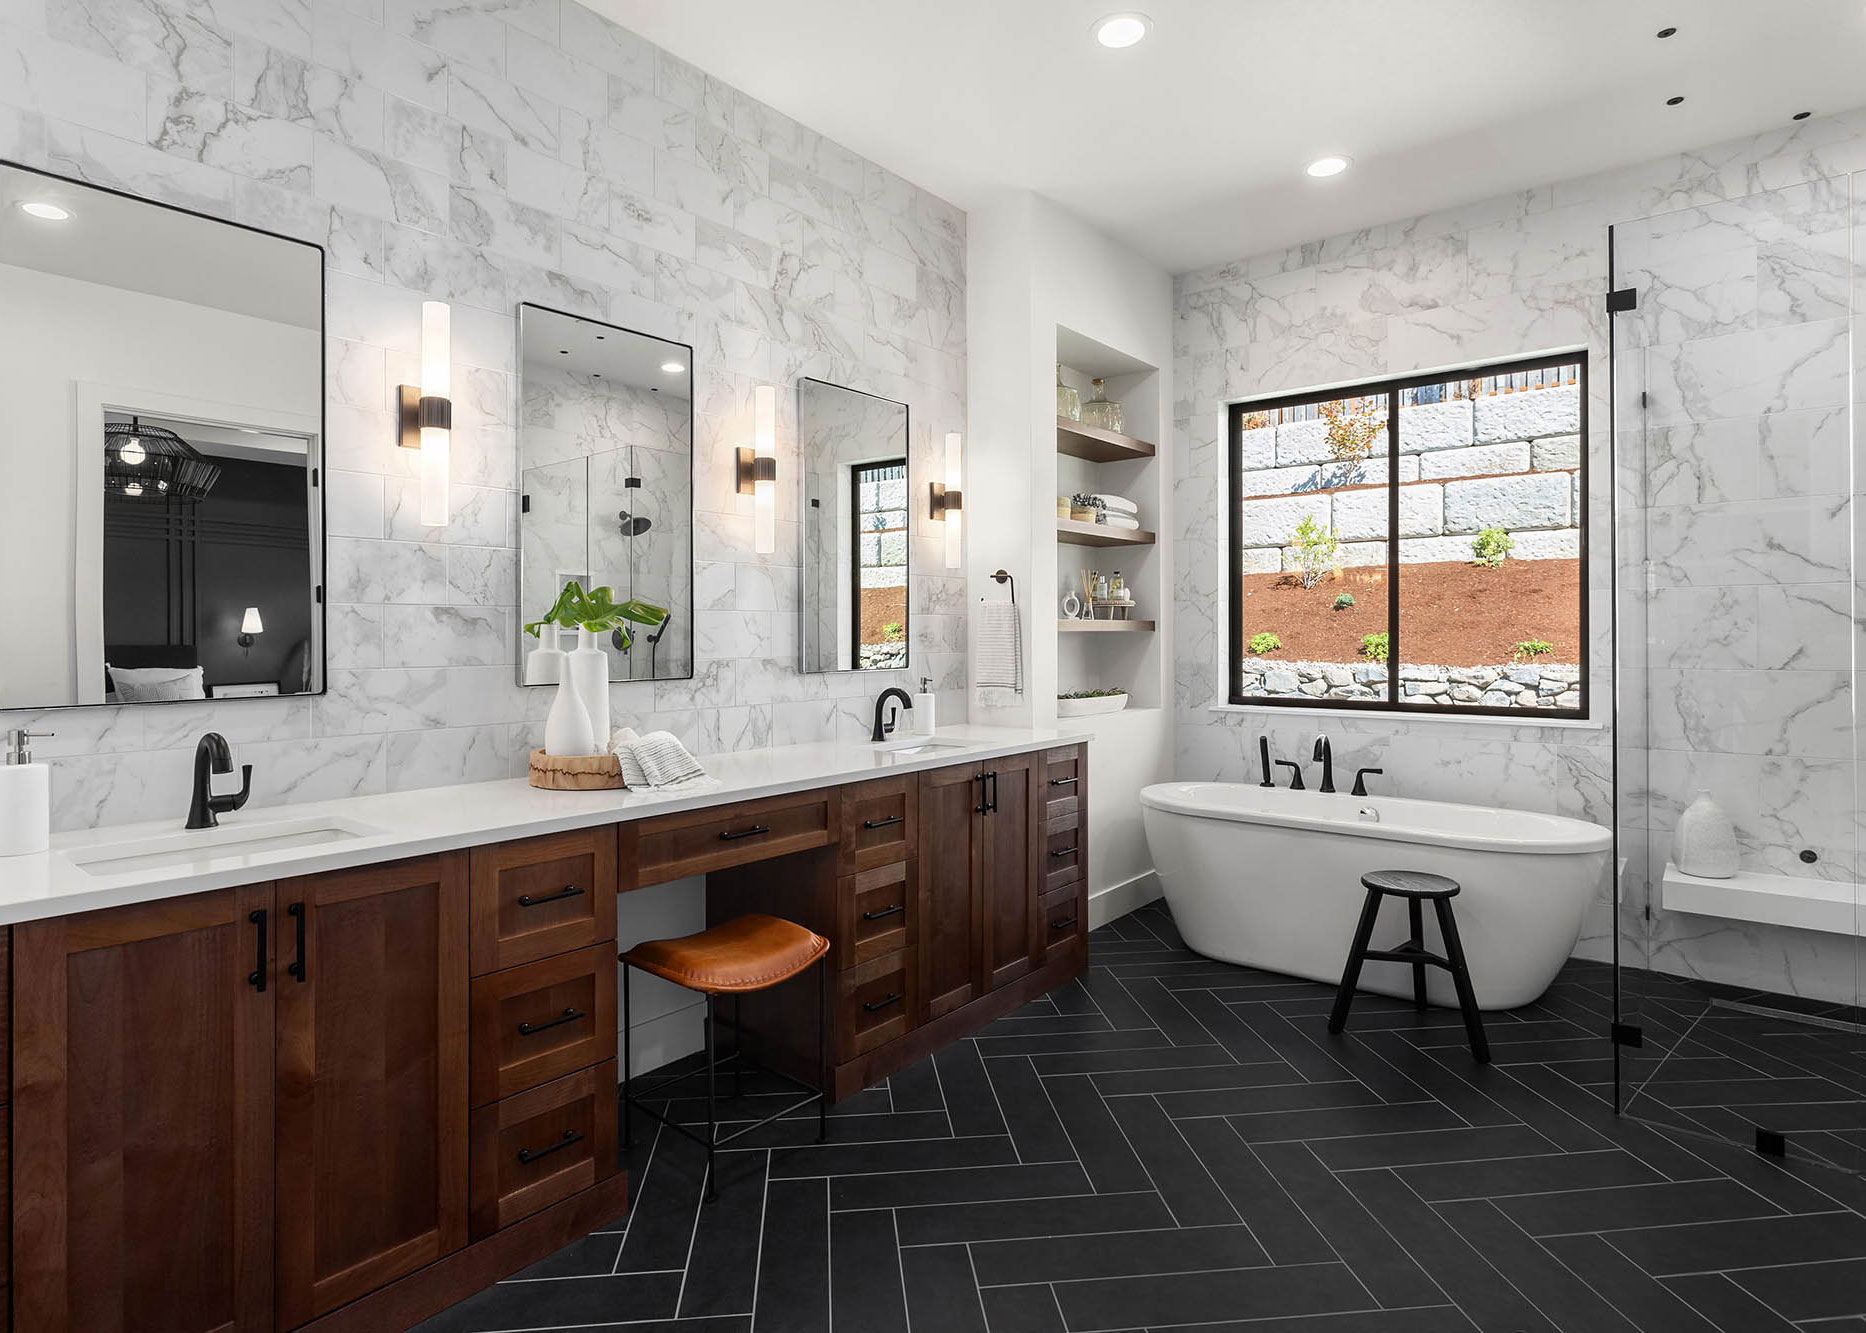 A modern bathroom remodel in Winder, GA features a soaking tub, large window and herringbone pattern floor.